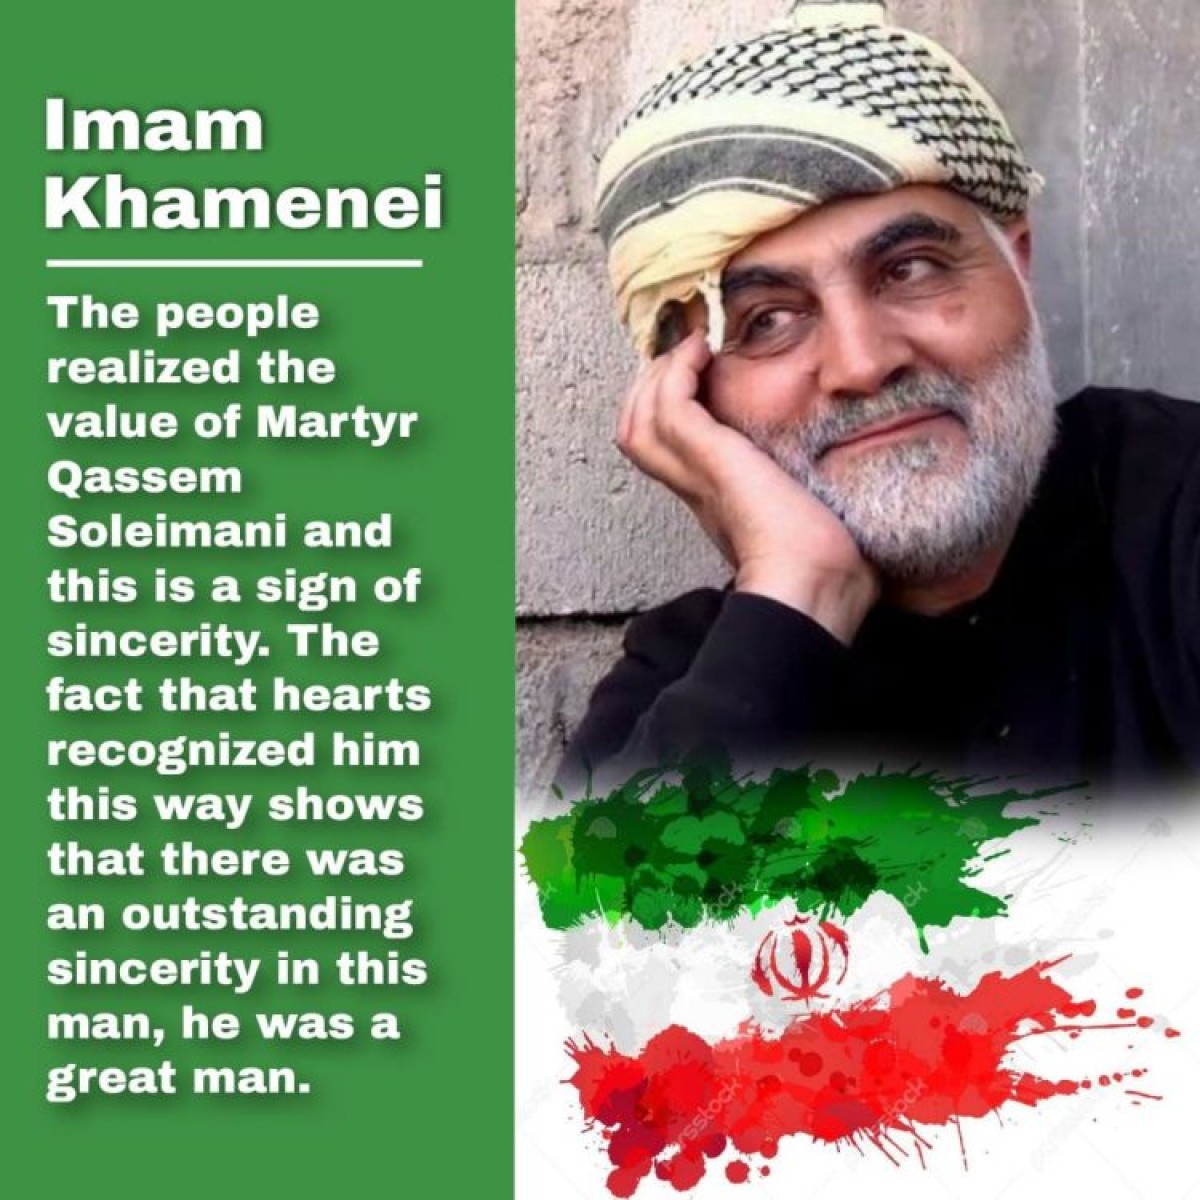 the value of Martyr Qassem Soleimani